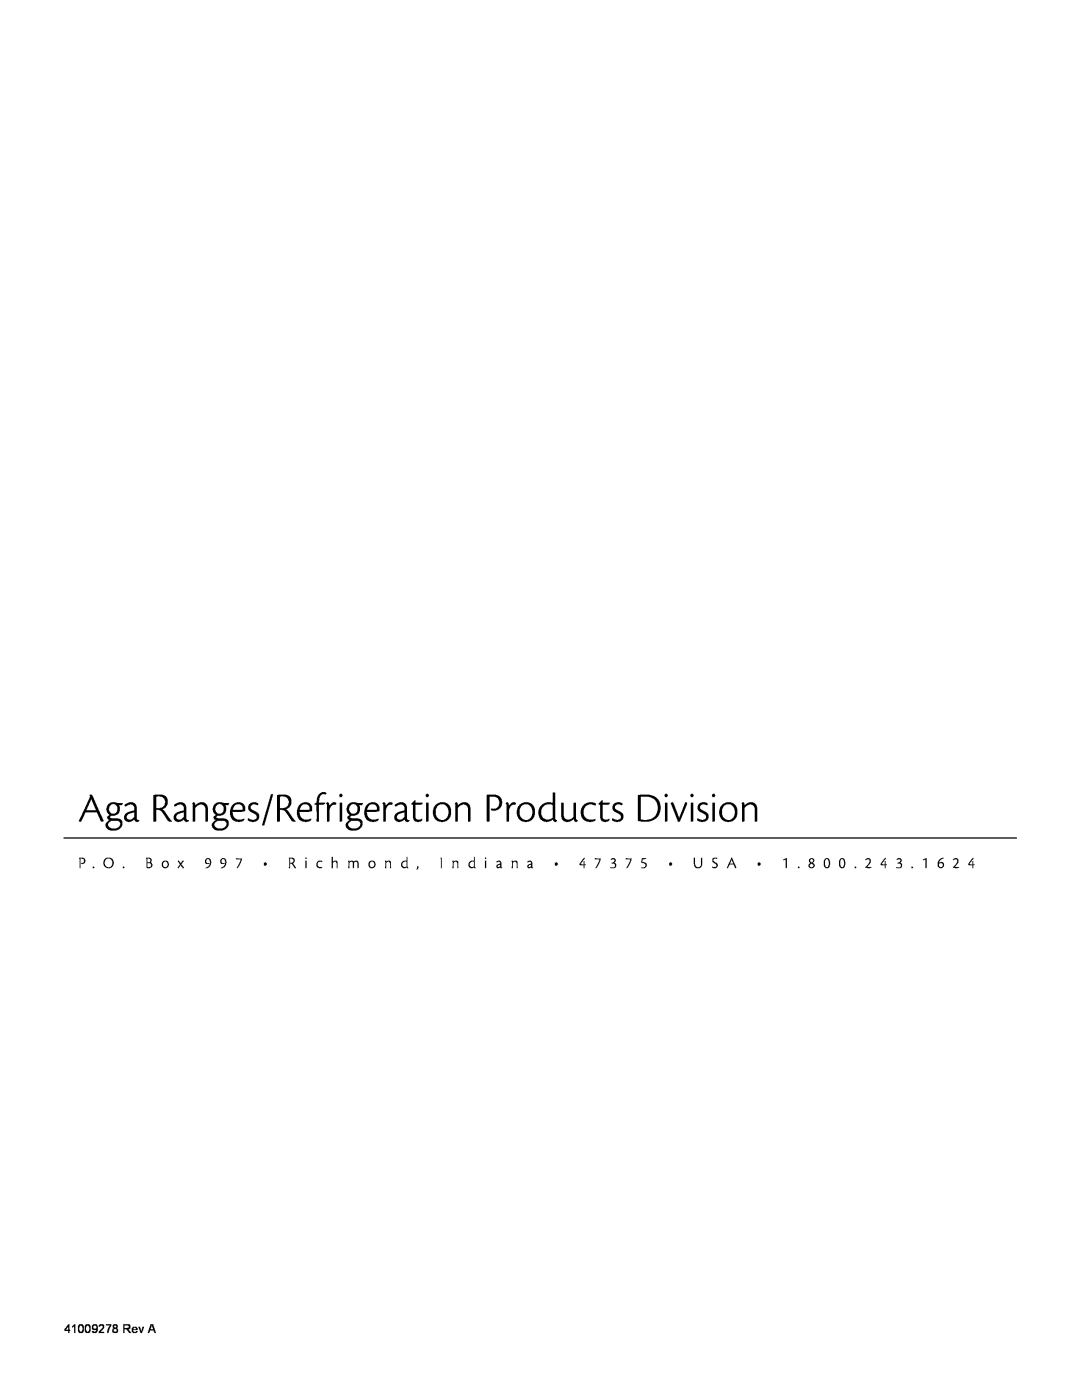 Aga Ranges 30AIM manual Aga Ranges/Refrigeration Products Division, Rev A 